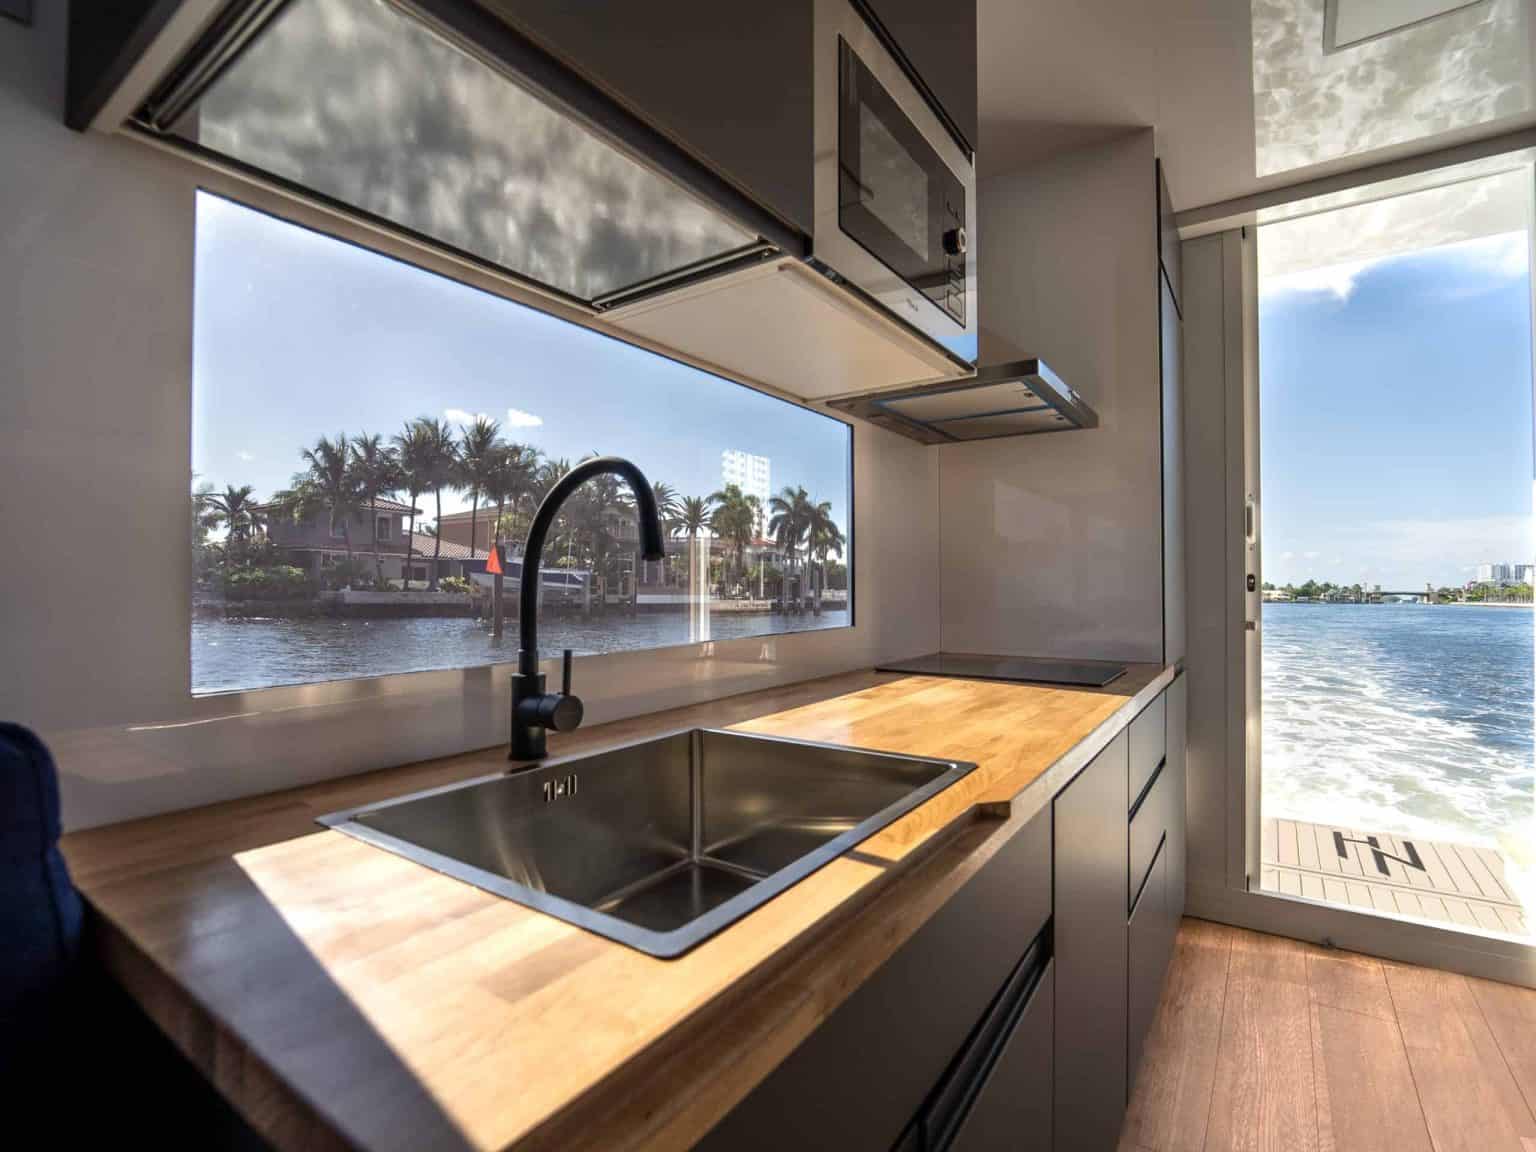 NH_interior_kitchen_sailing2-scaled.jpg